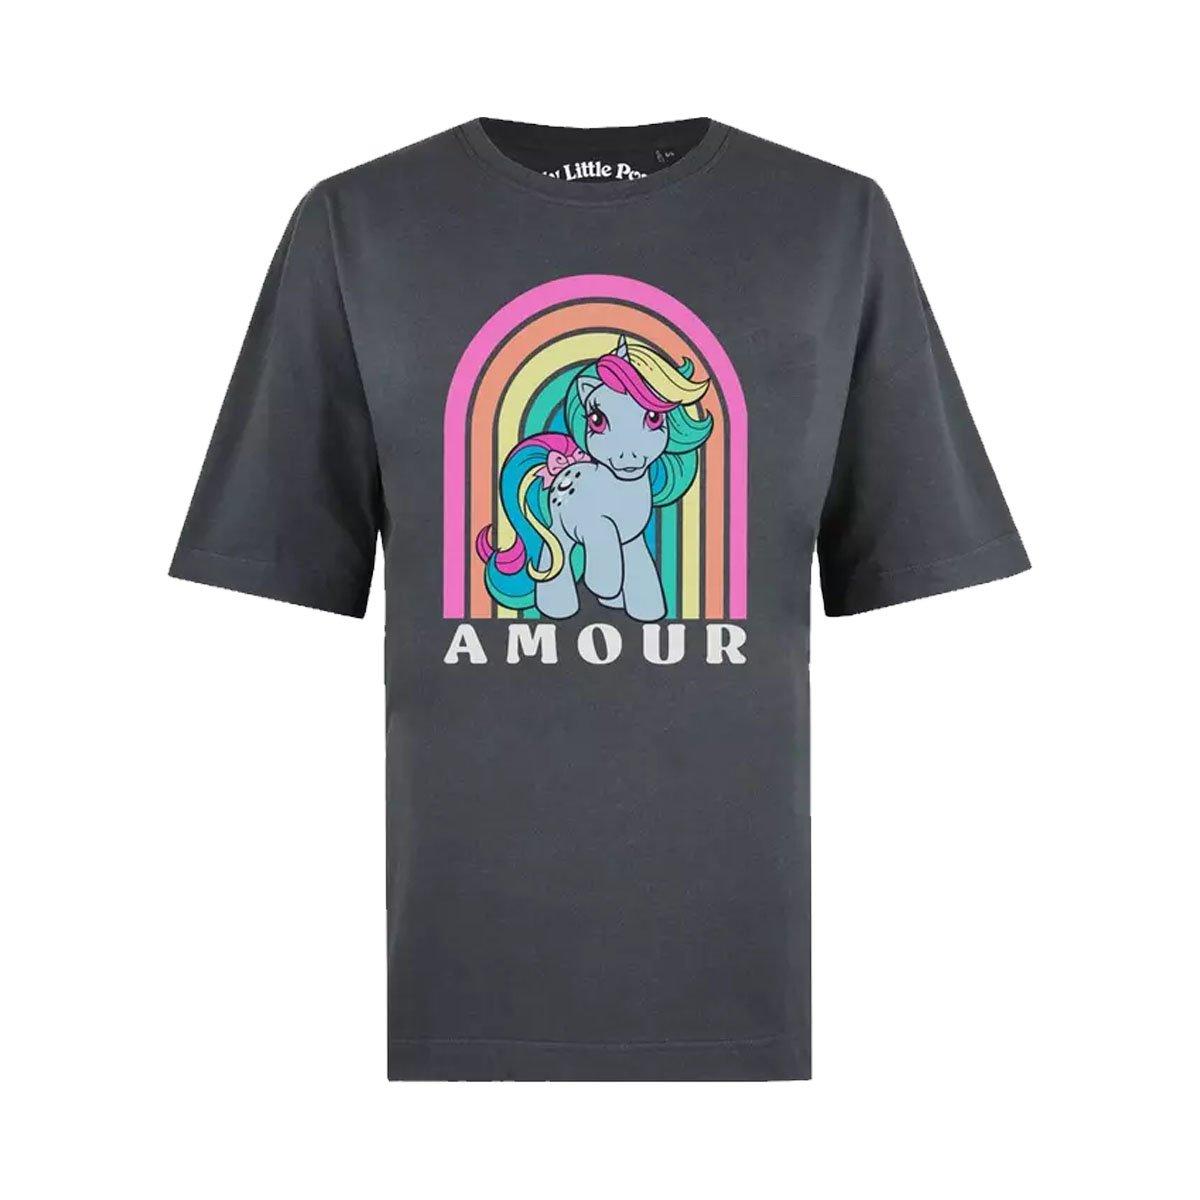 Amour Tshirt Damen Charcoal Black M von My Little Pony